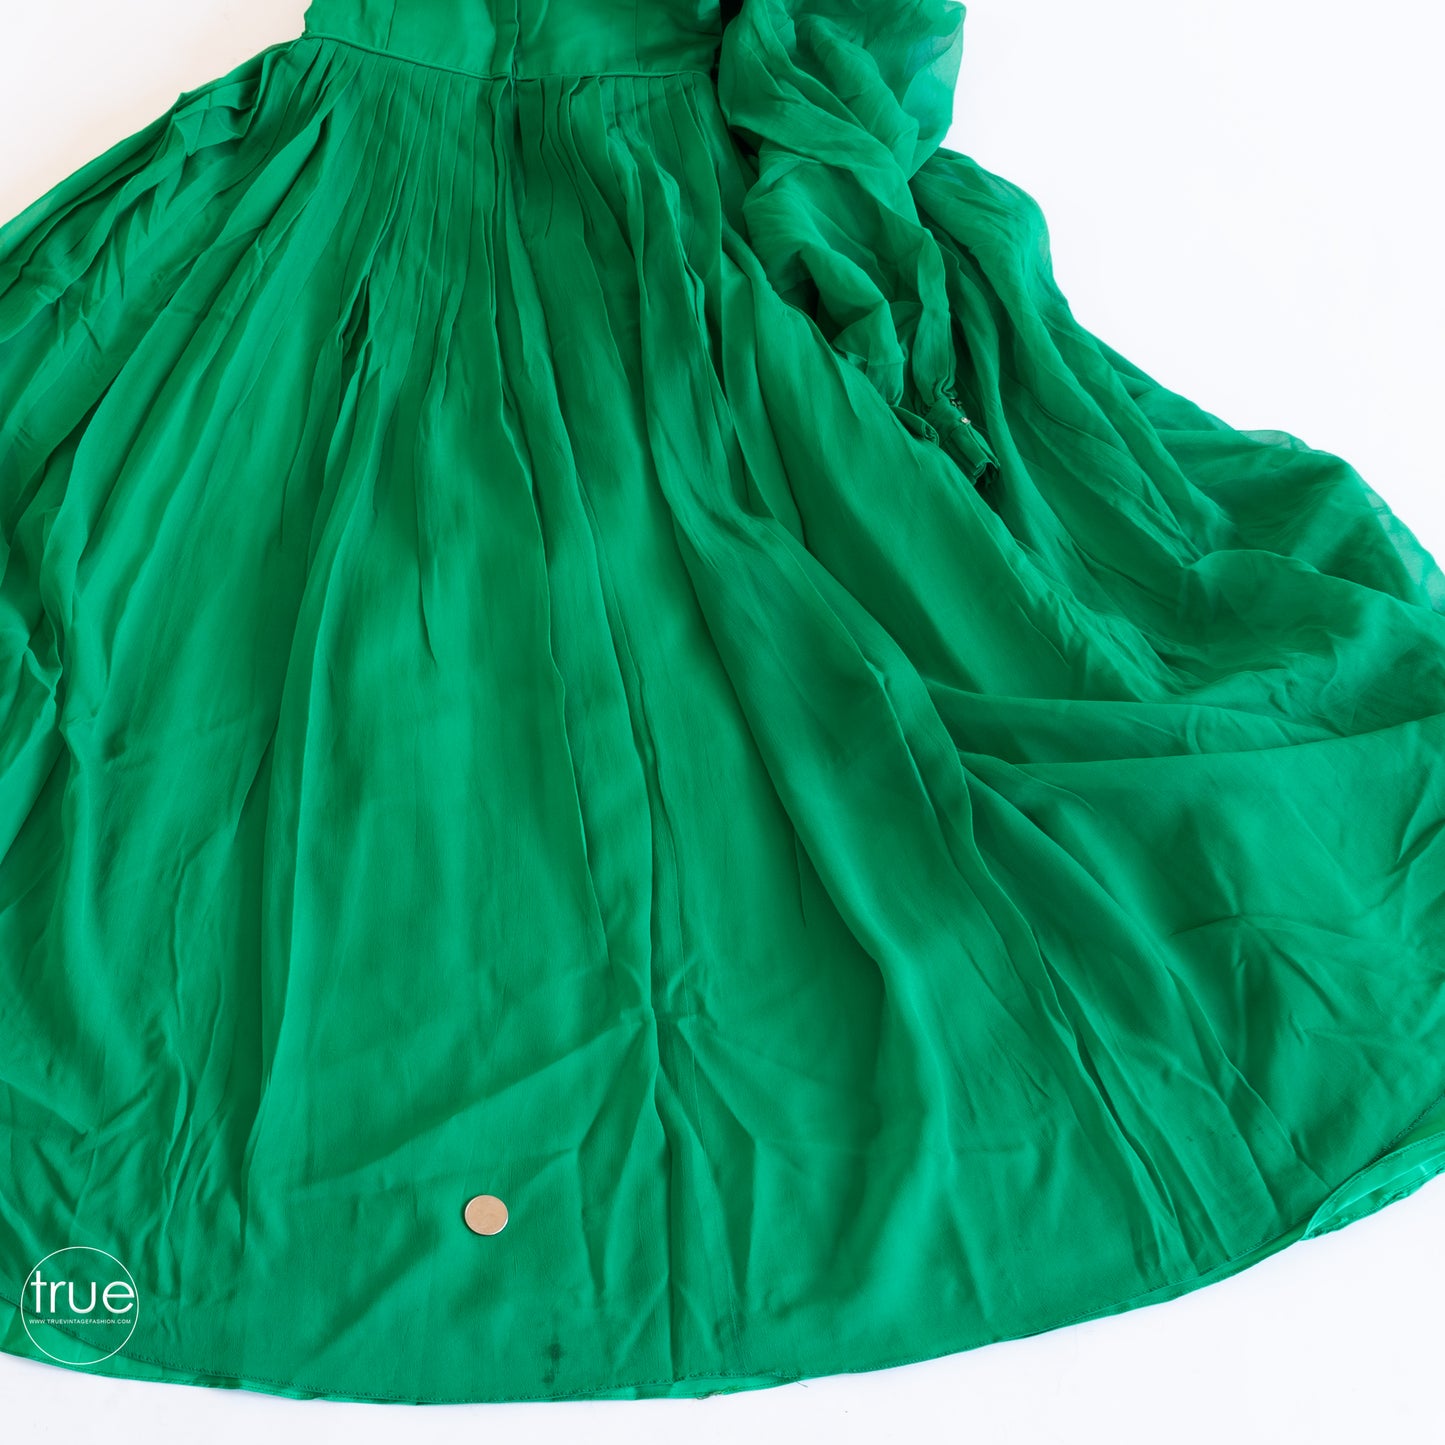 vintage 1960's dress ...ethereal emerald chiffon goddess dress with shoulder shash